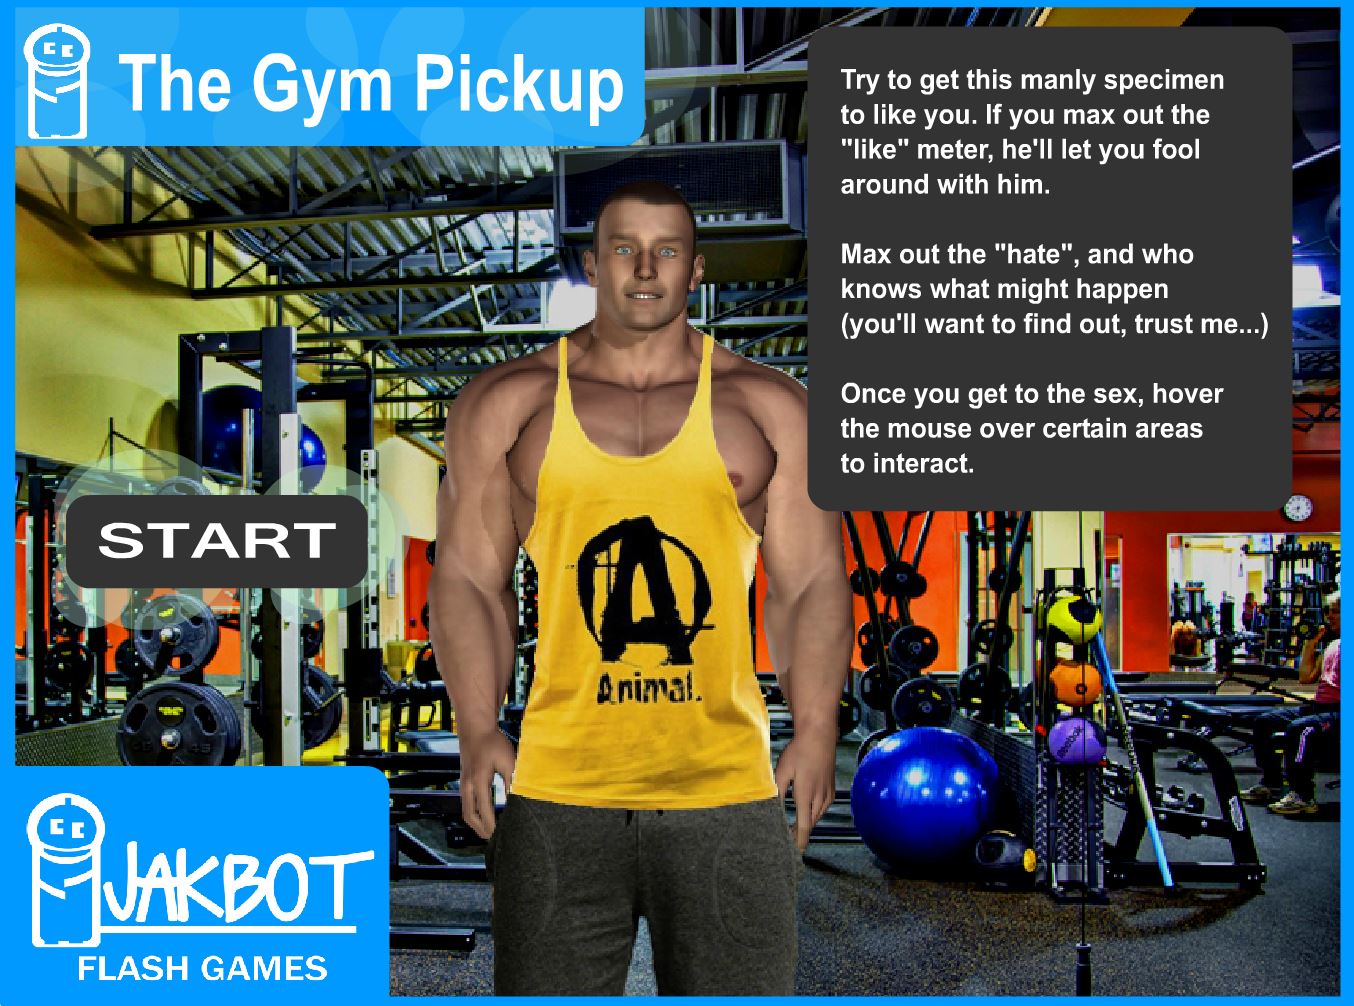 Jakbot The Gym Pickup